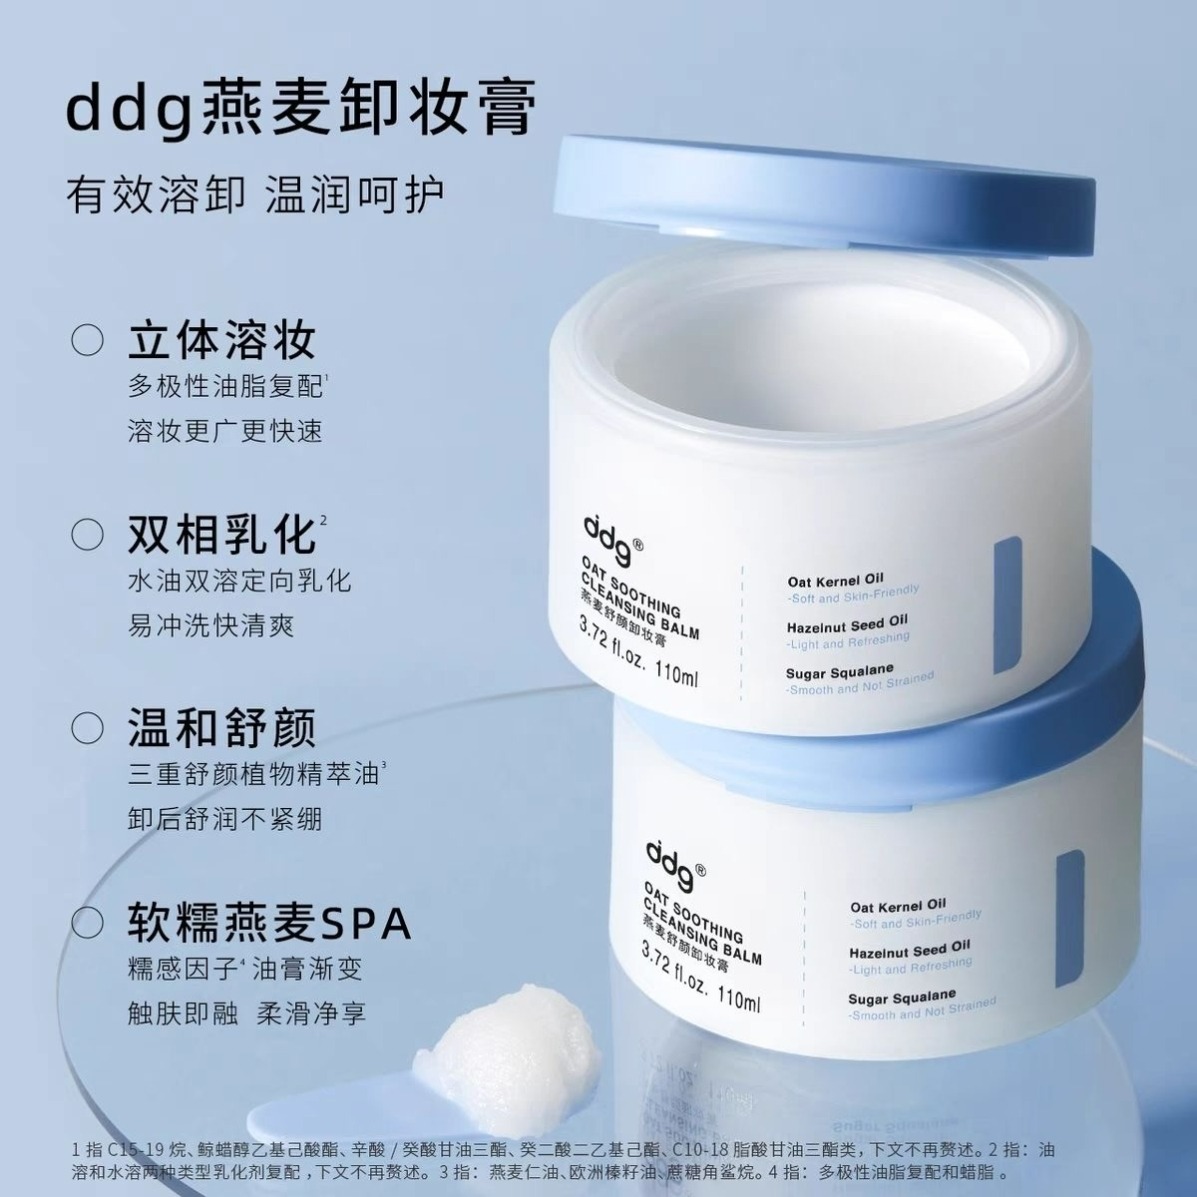 ddg511燕麦卸妆膏温和敏感肌专用干皮洗卸合一清洁卸妆油正品